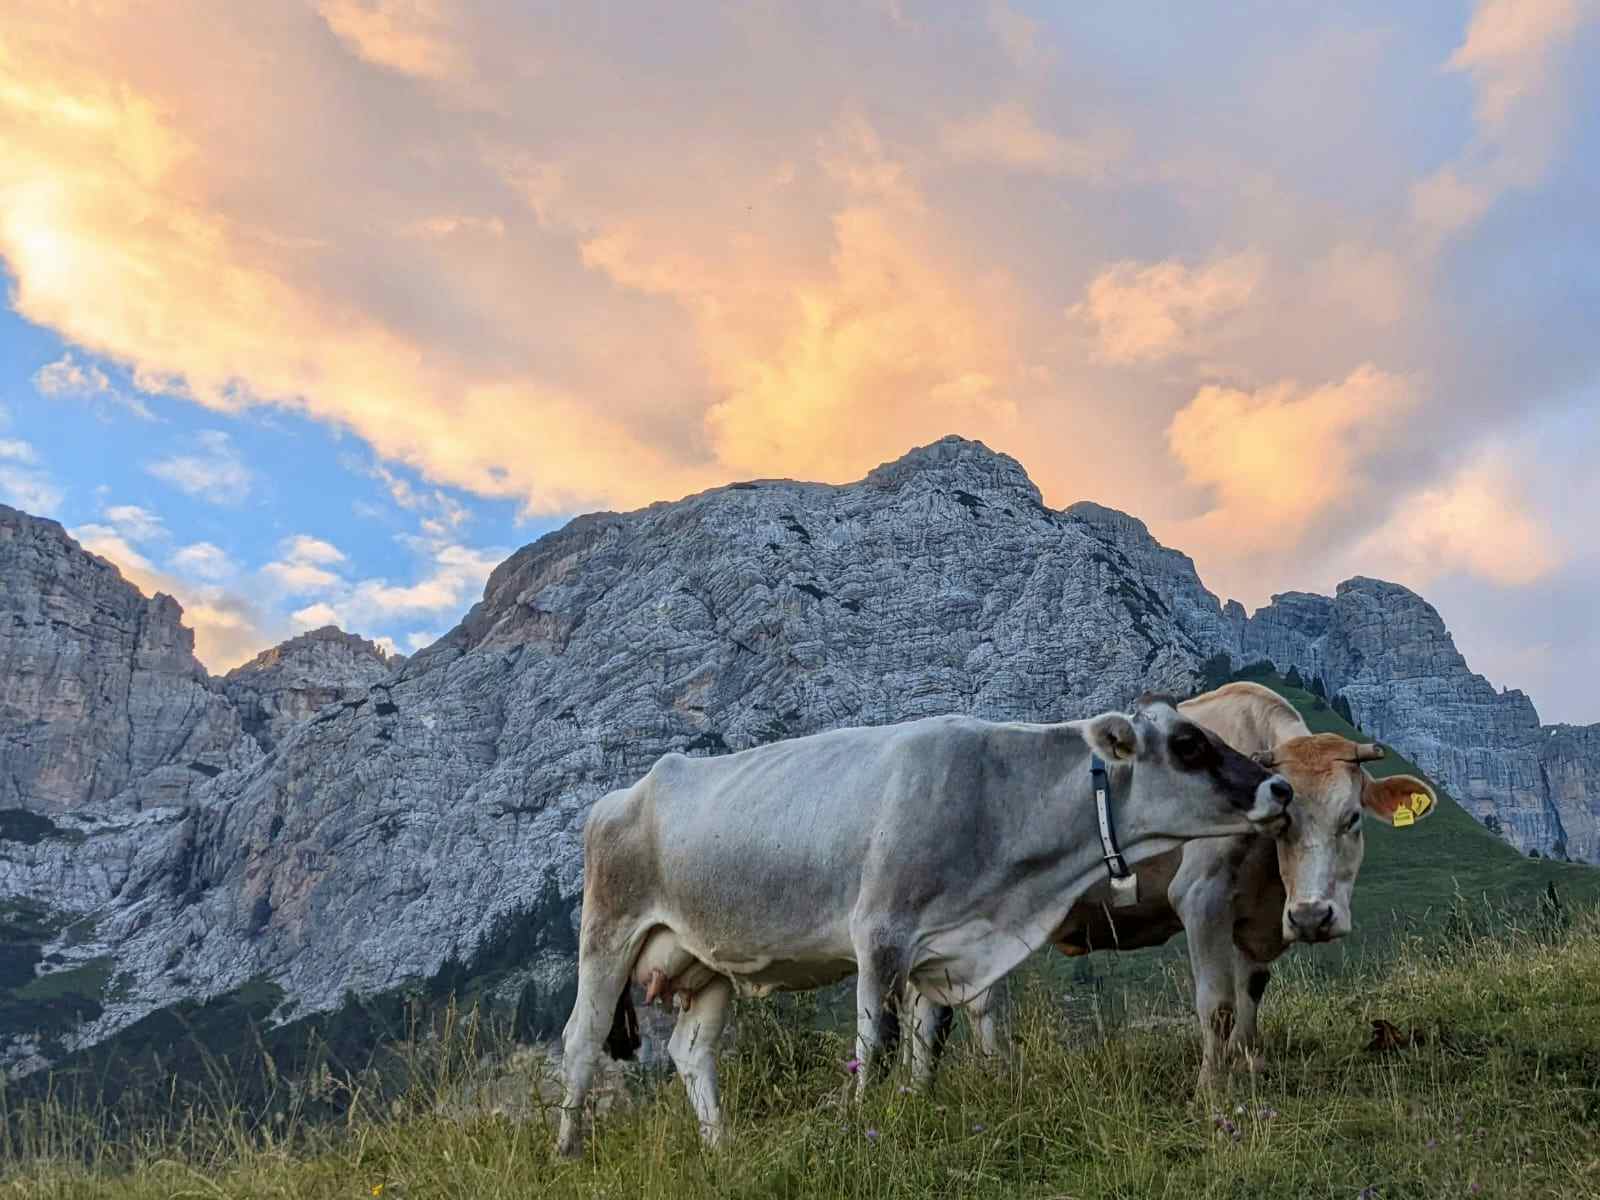 Alpine cows in the Dolomites, Italy. Photo: Host/ Wild in the Dolomiti